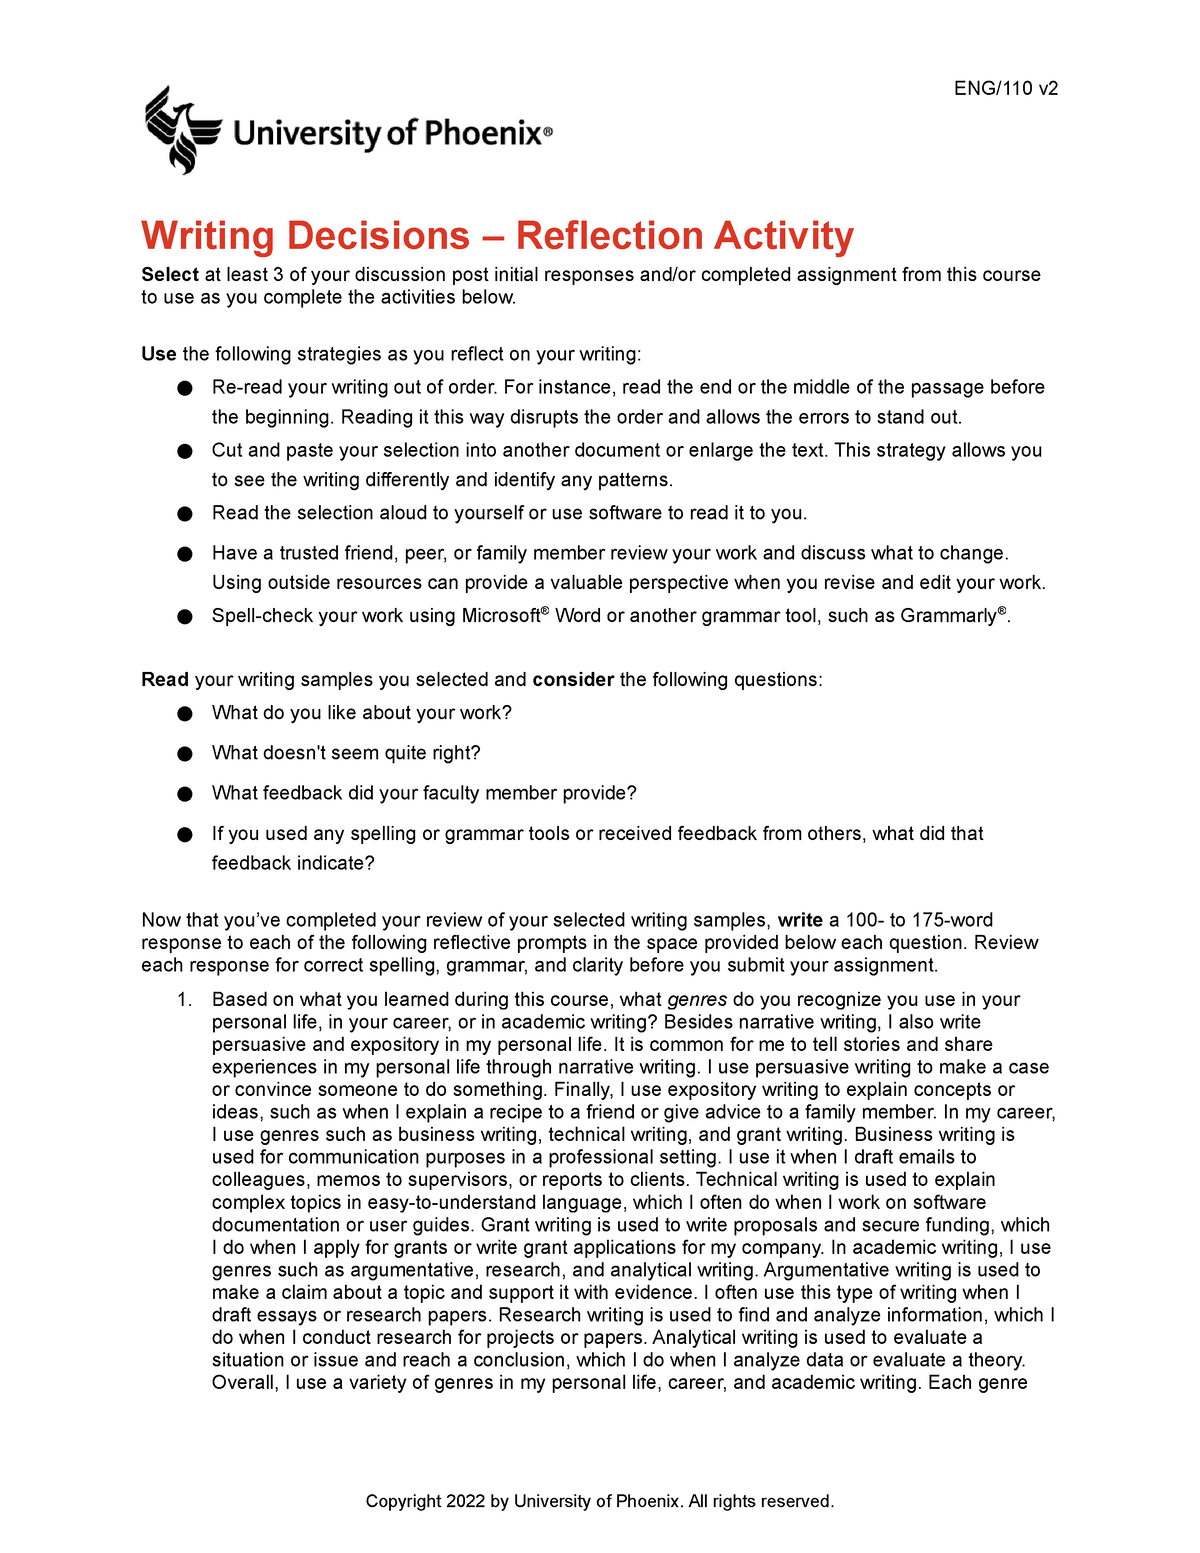 Eng110 V2 Wk5 Writing Decisions Reflection Activity 1 Eng110 V